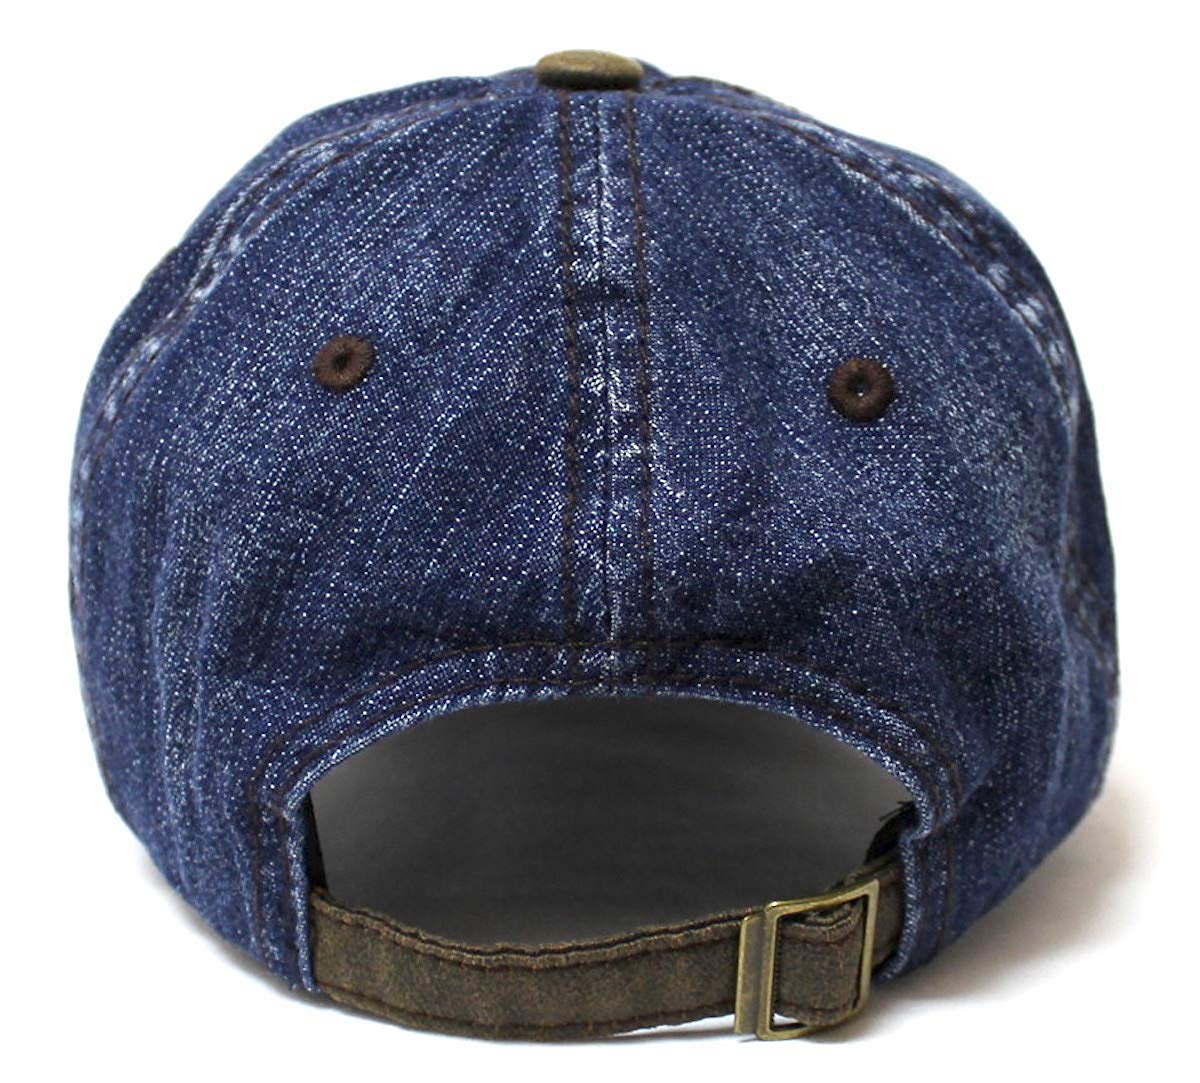 Classic Ballcap American Cowboy Wild Wild West Patch Embroidery Vintage Hat, Blue Denim - Caps 'N Vintage 